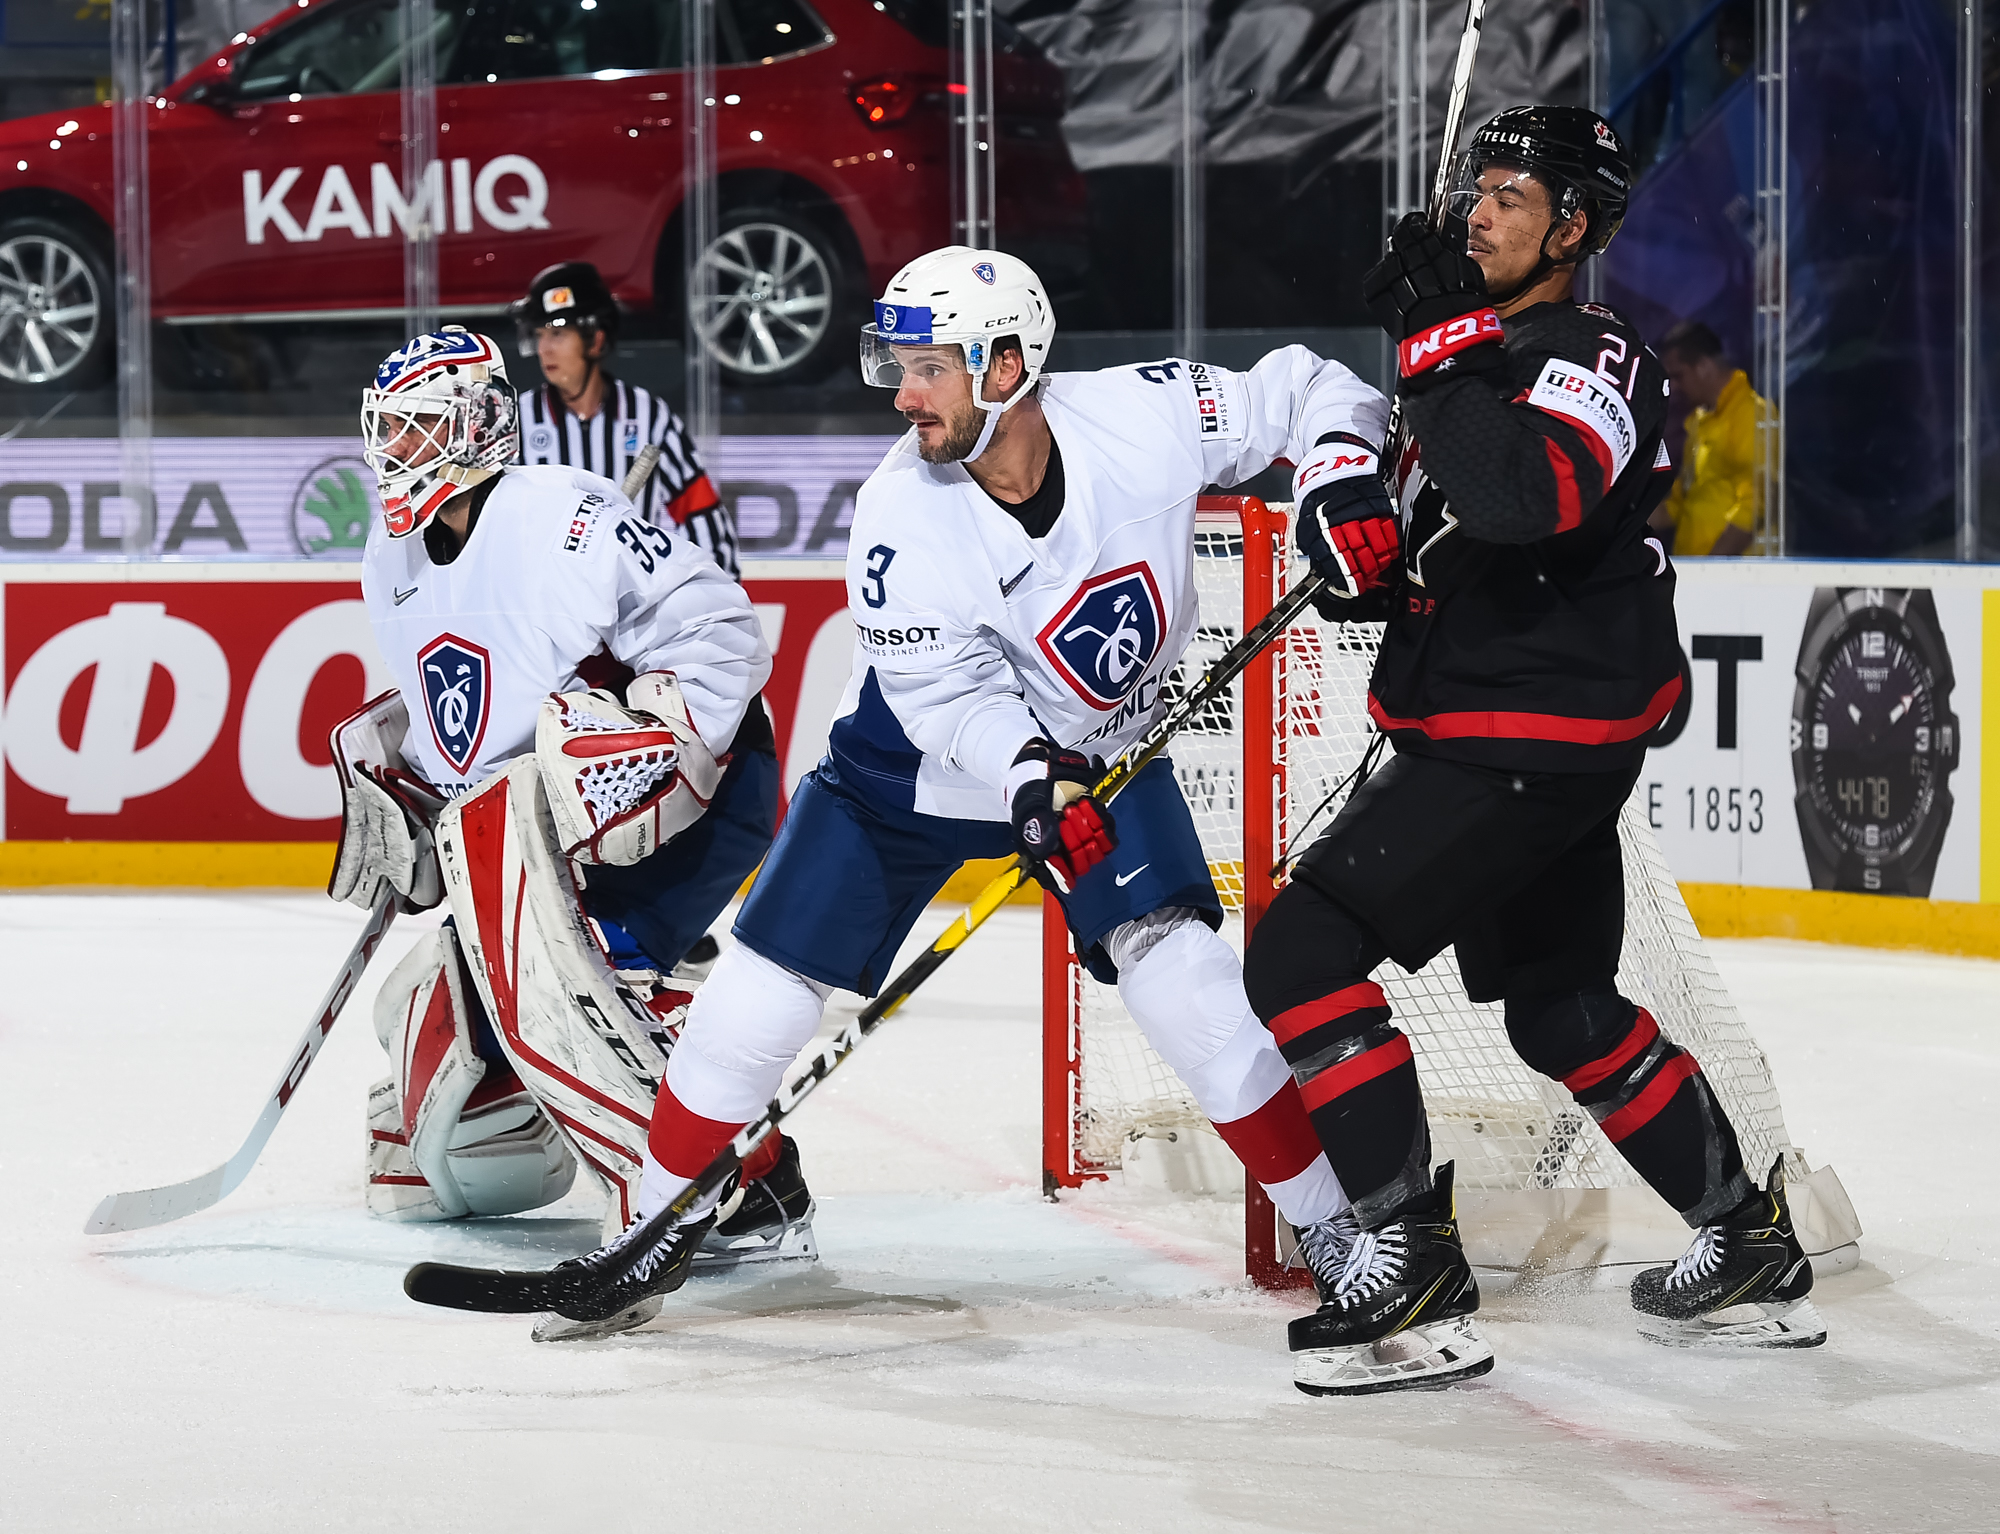 IIHF - Gallery: Canada vs. France - 2019 IIHF Ice Hockey World Championship